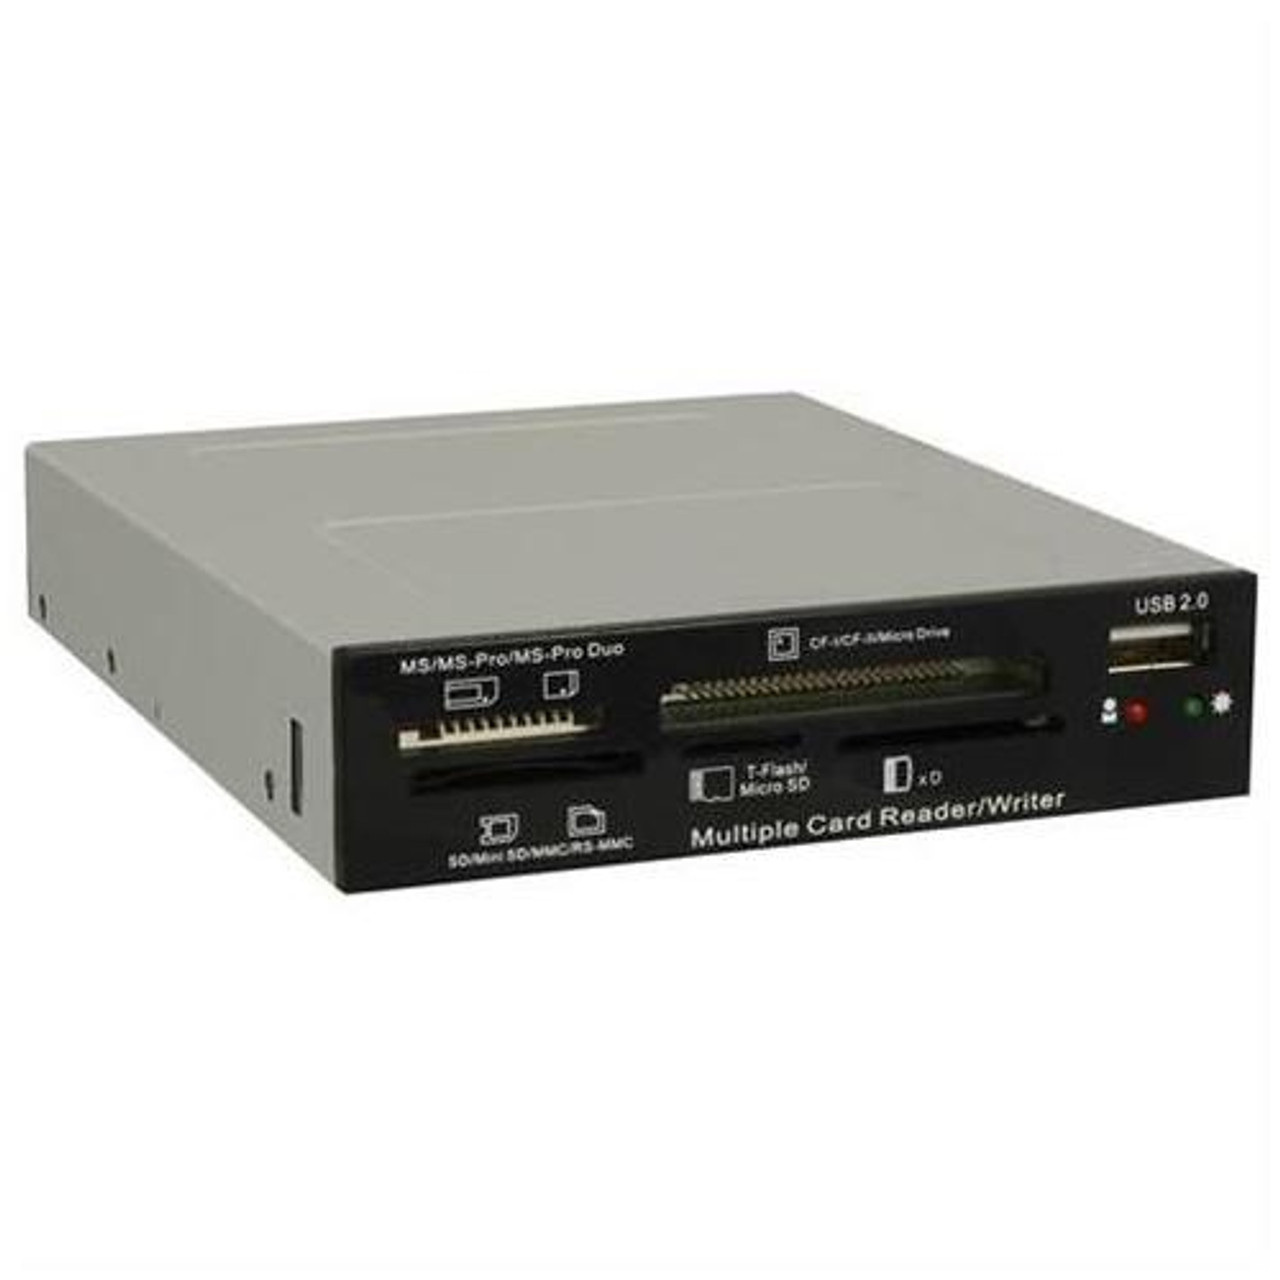 TK223 | Dell | Hauppauge WinTV HVR1200 DVB-T Multi-PAL PCI-X TV Tuner